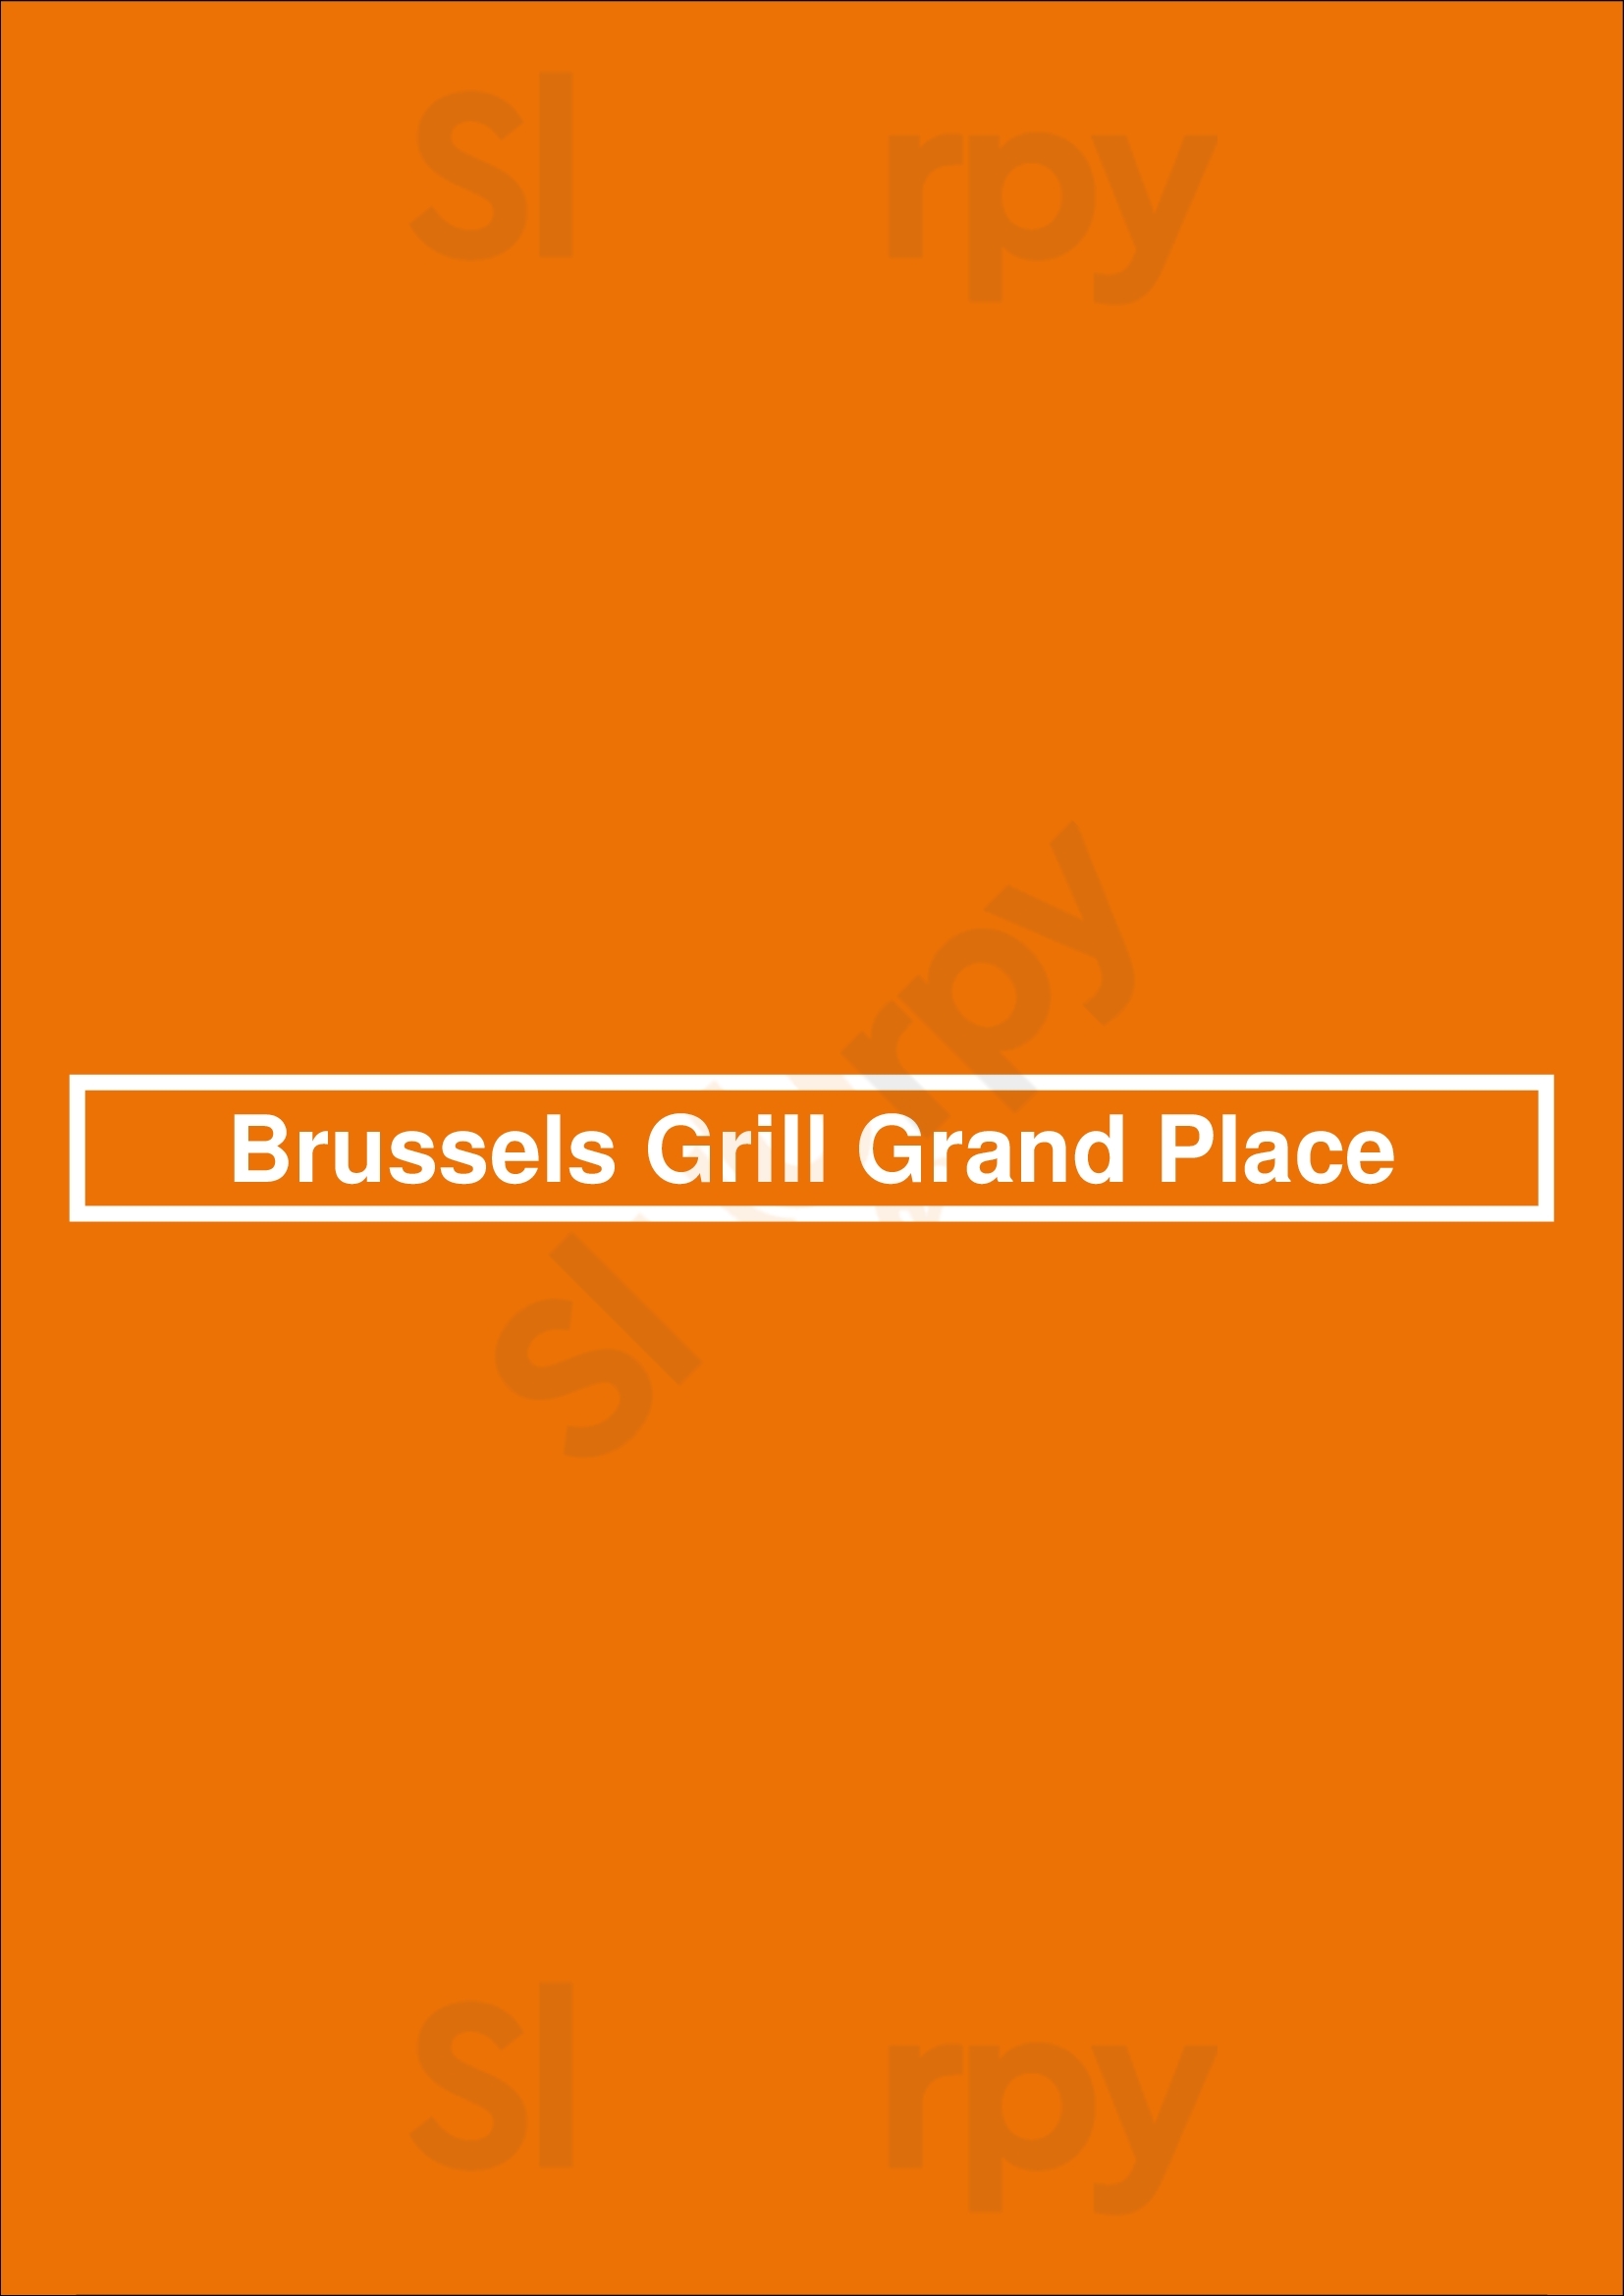 Brussels Grill Grand Place Bruxelles Menu - 1